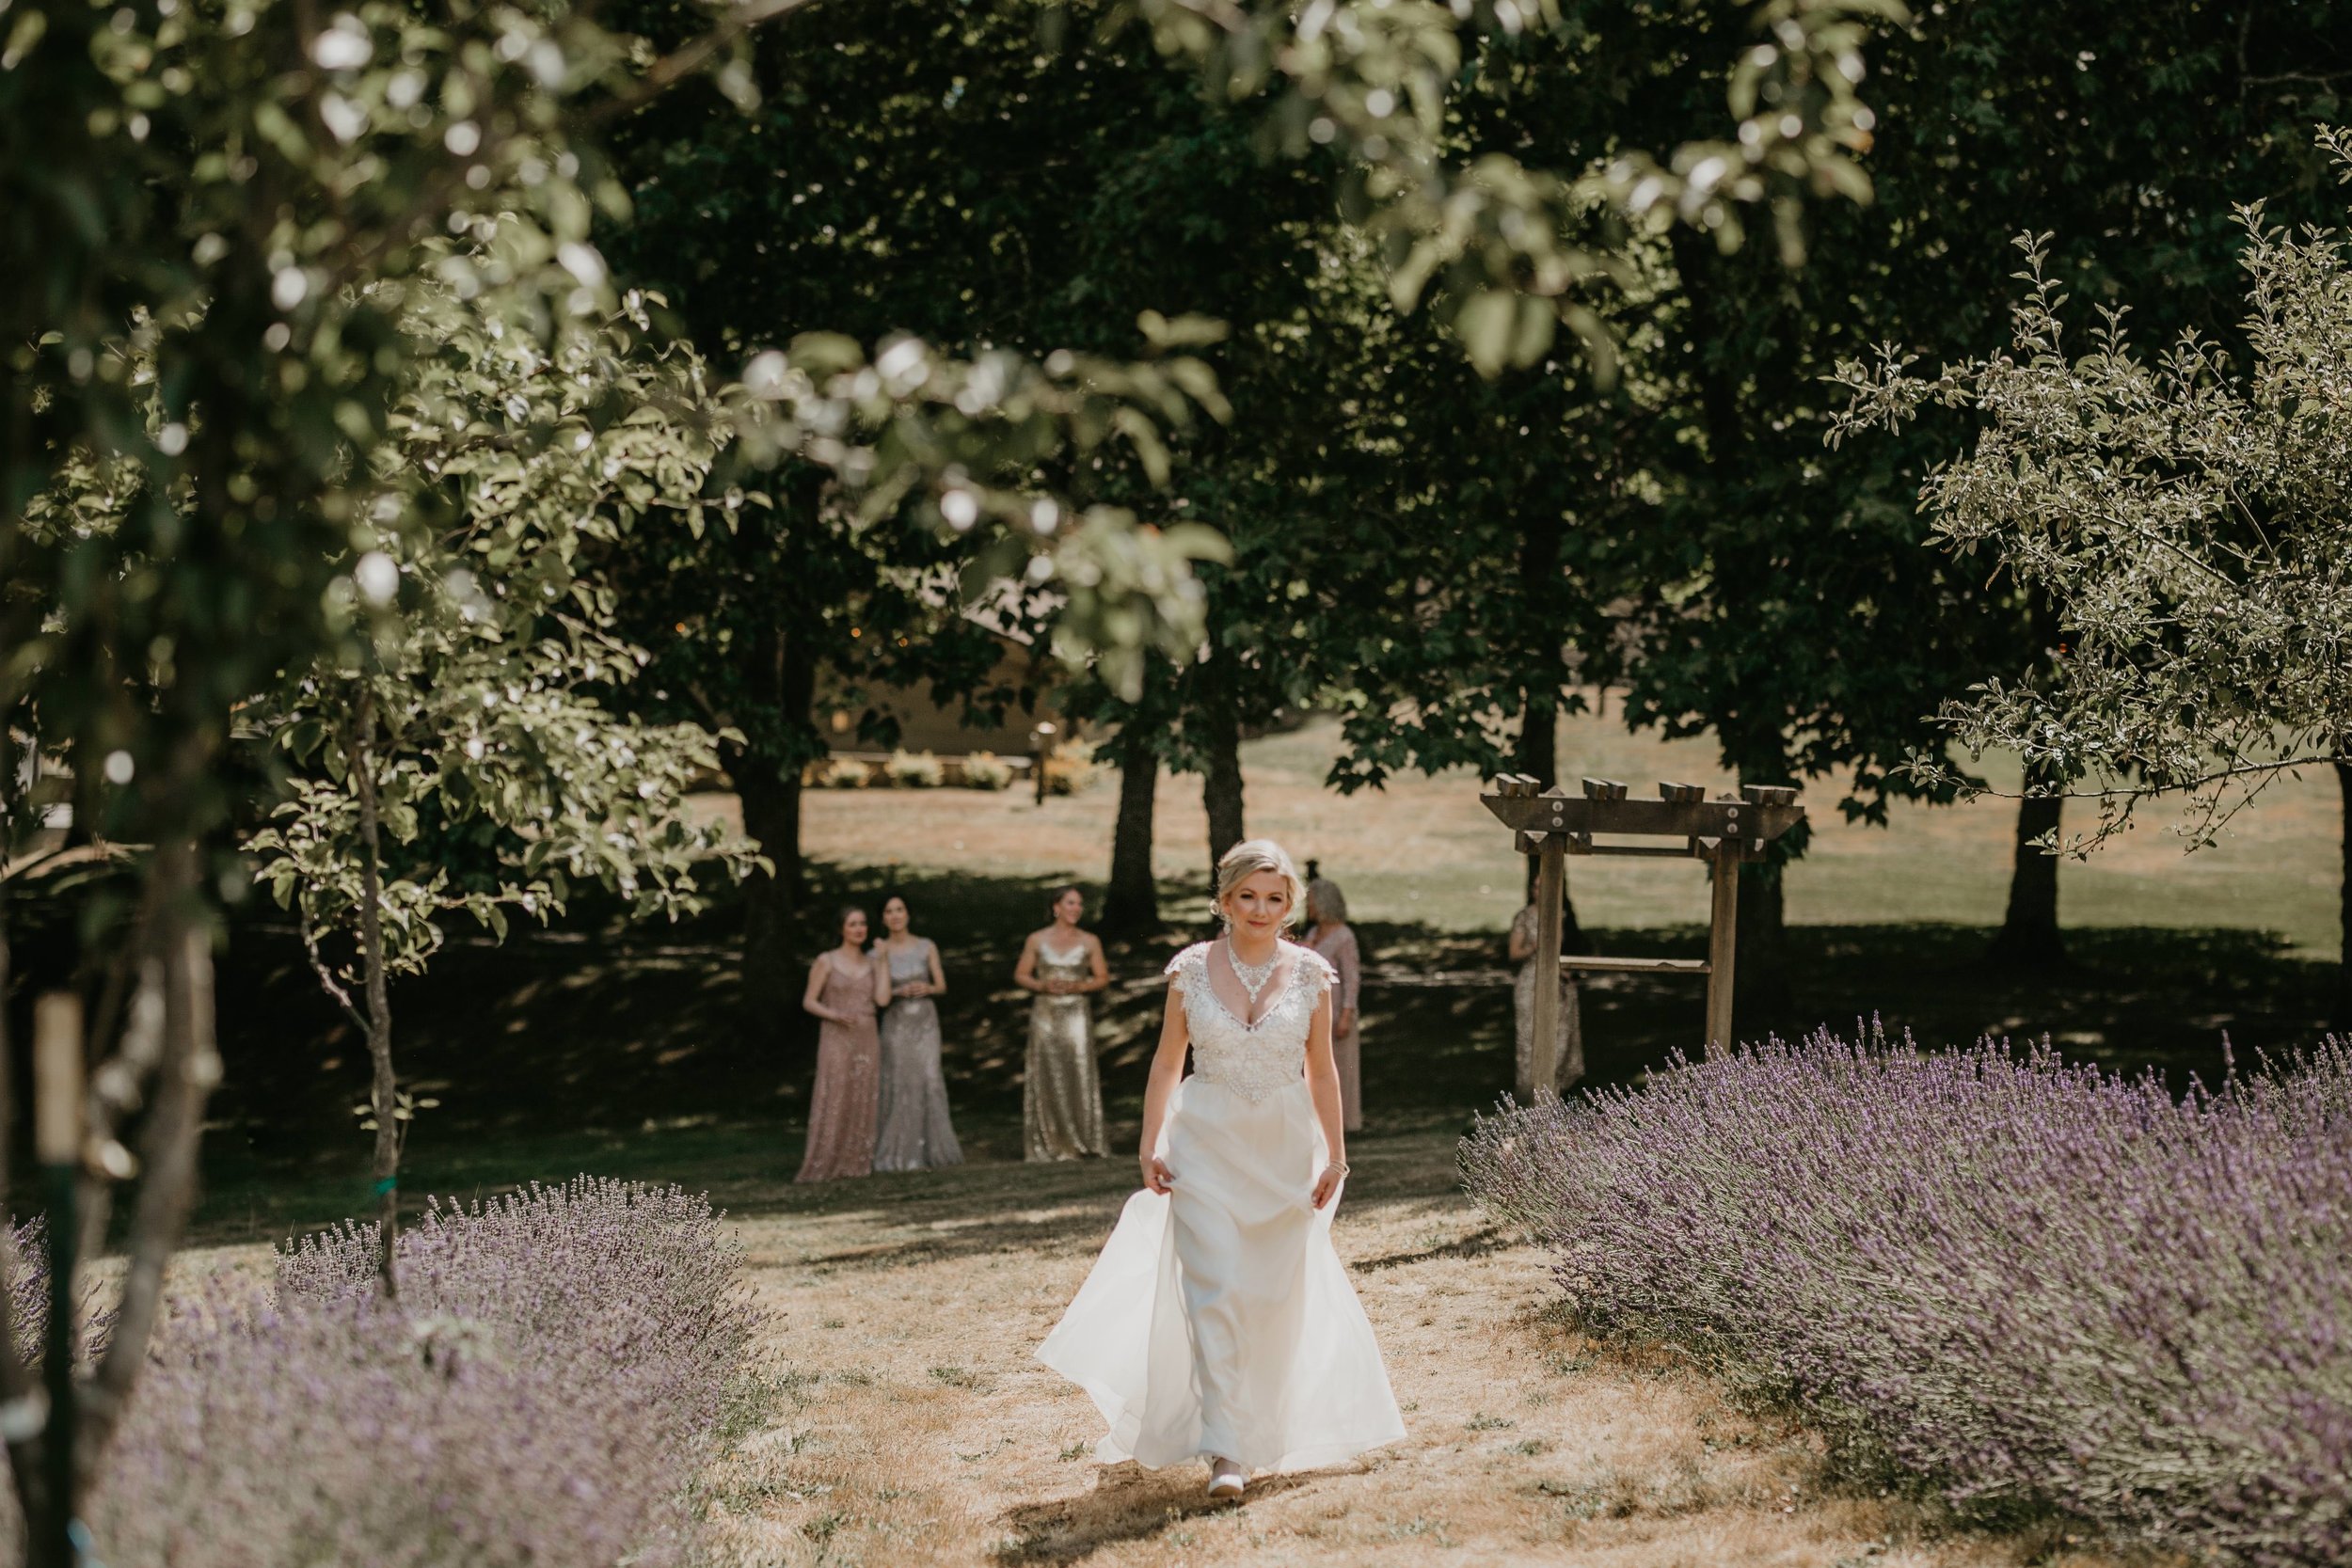 nicole-daacke-photography-kingston-house-bainbride-washington-wedding-photography-summer-wedding-lavendar-field-pacific-northwest-wedding-glam-forest-elopement-photographer-17.jpg